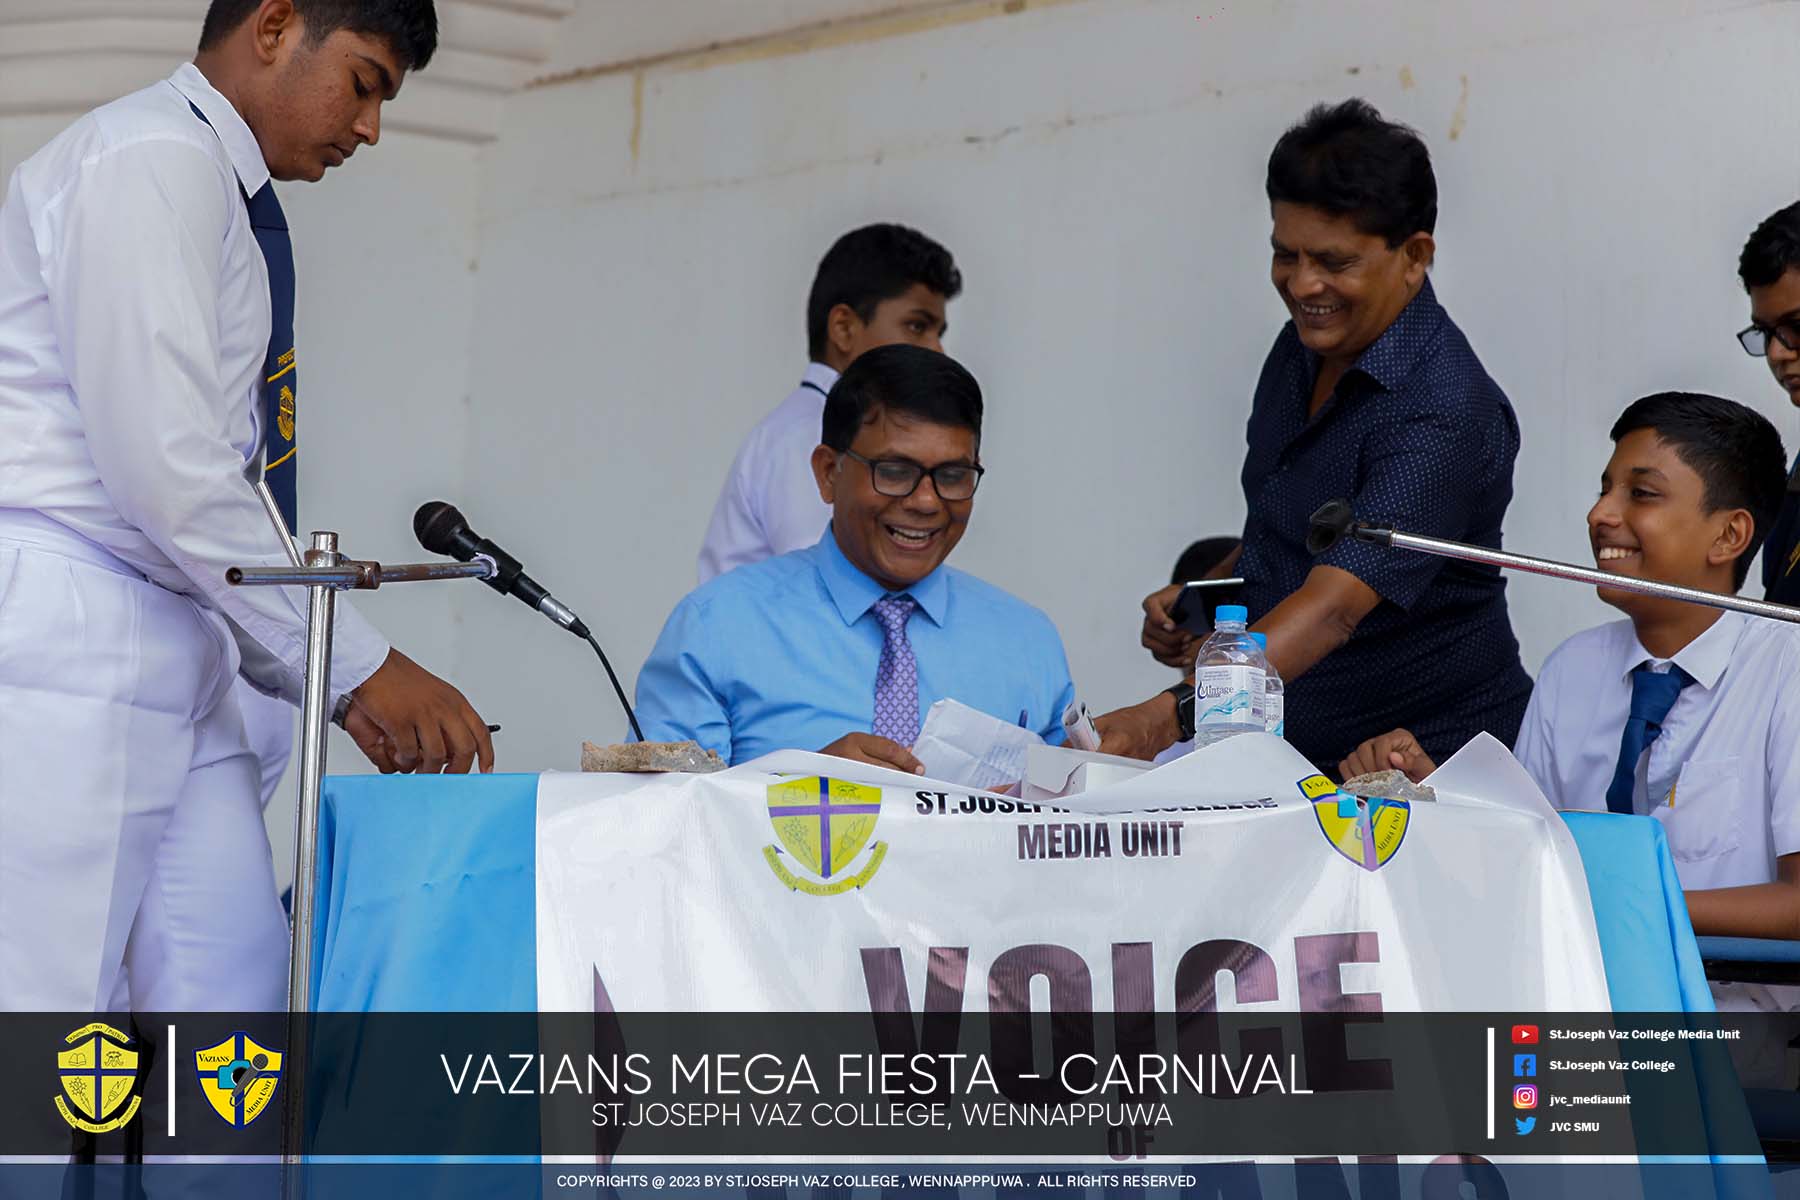 Vazians Mega Fiesta - Carnival - St. Joseph Vaz College - Wennappuwa - Sri Lanka